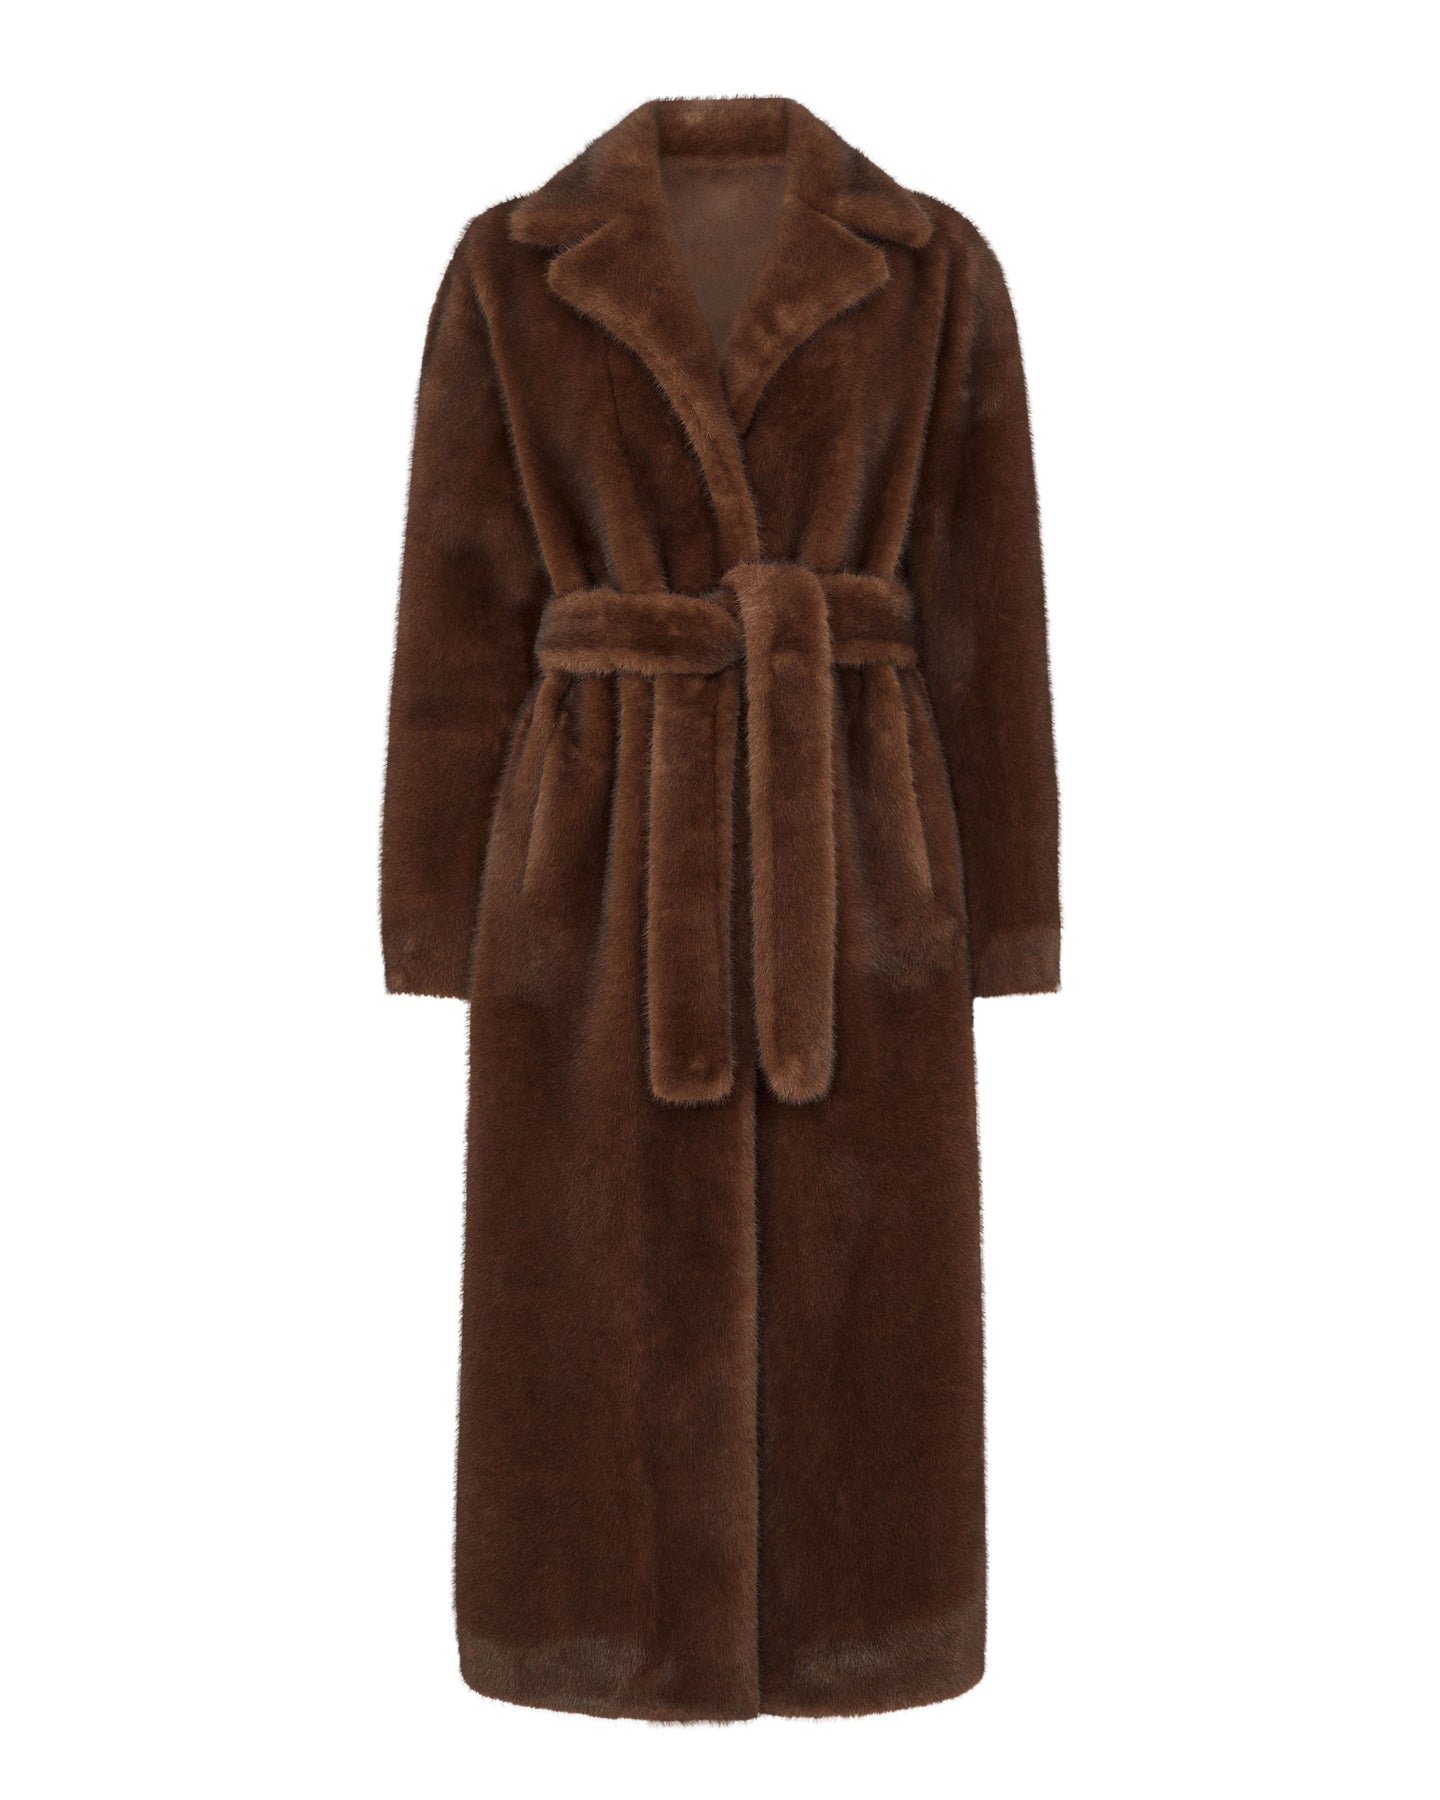 N.Peal Women's Faux Mink Long Coat Brown